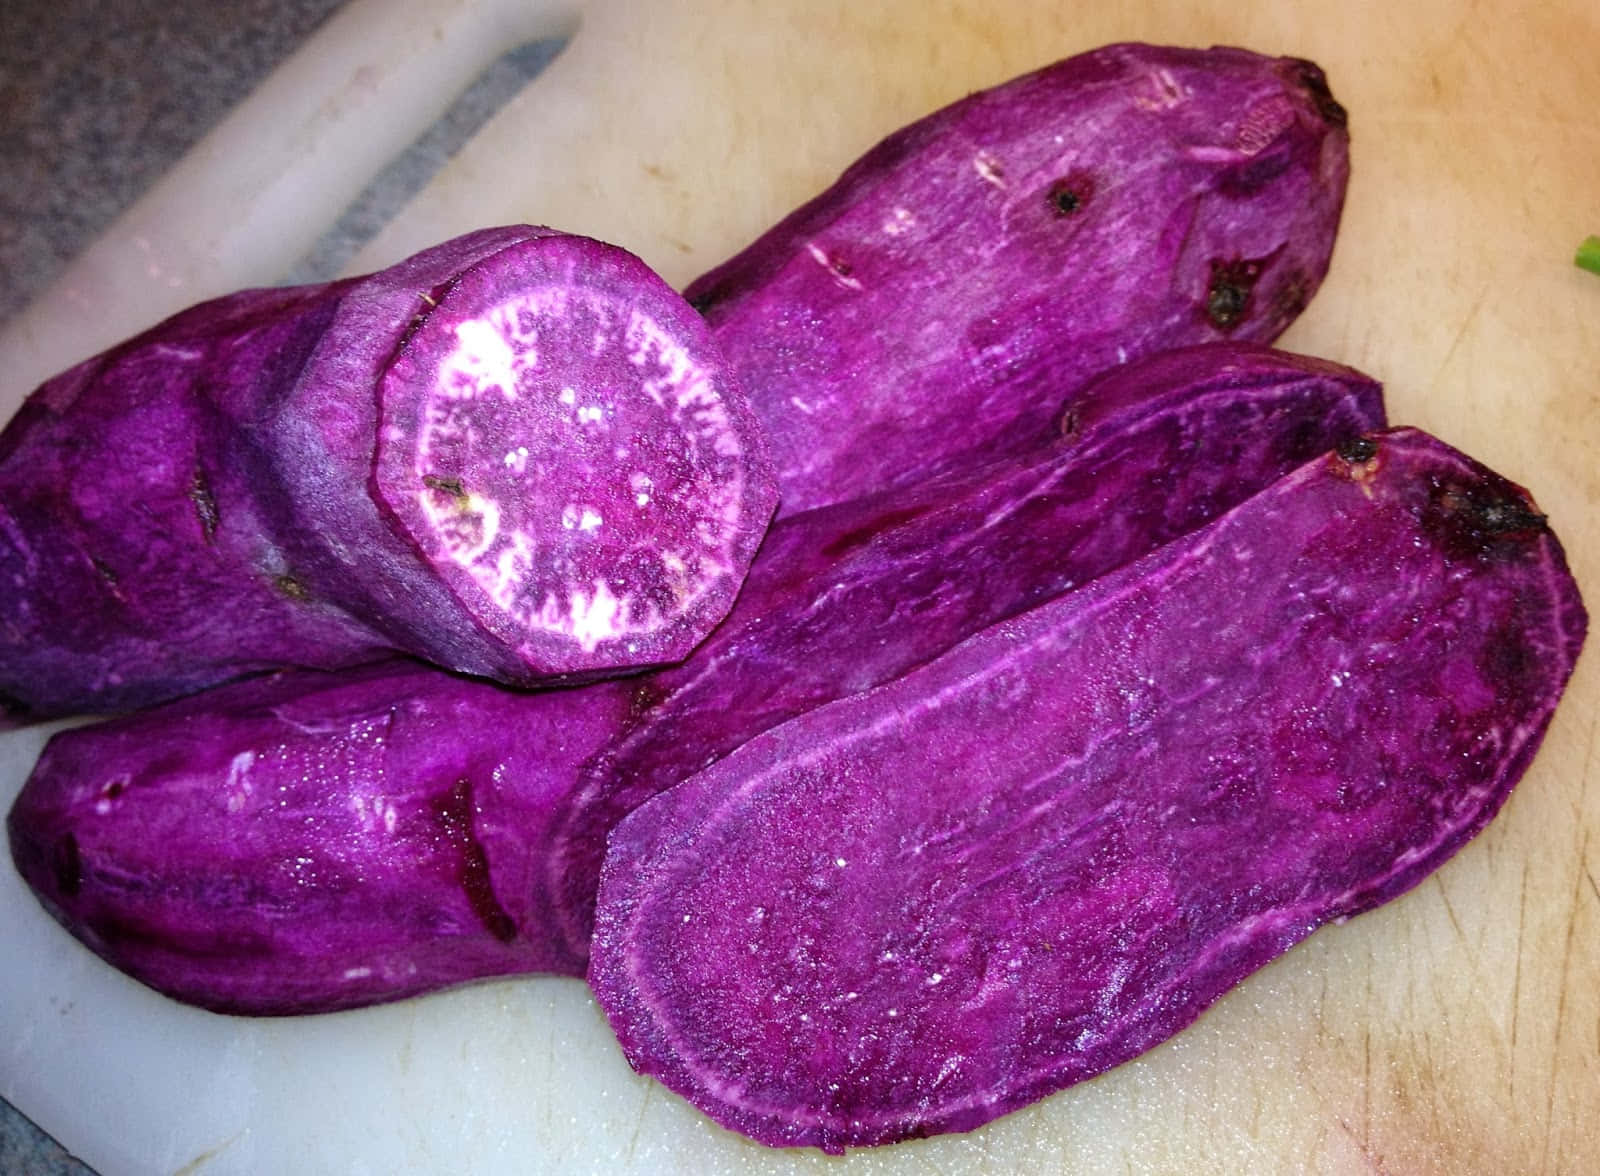 Enjoy the nutrious and delicious Purple Potato Wallpaper